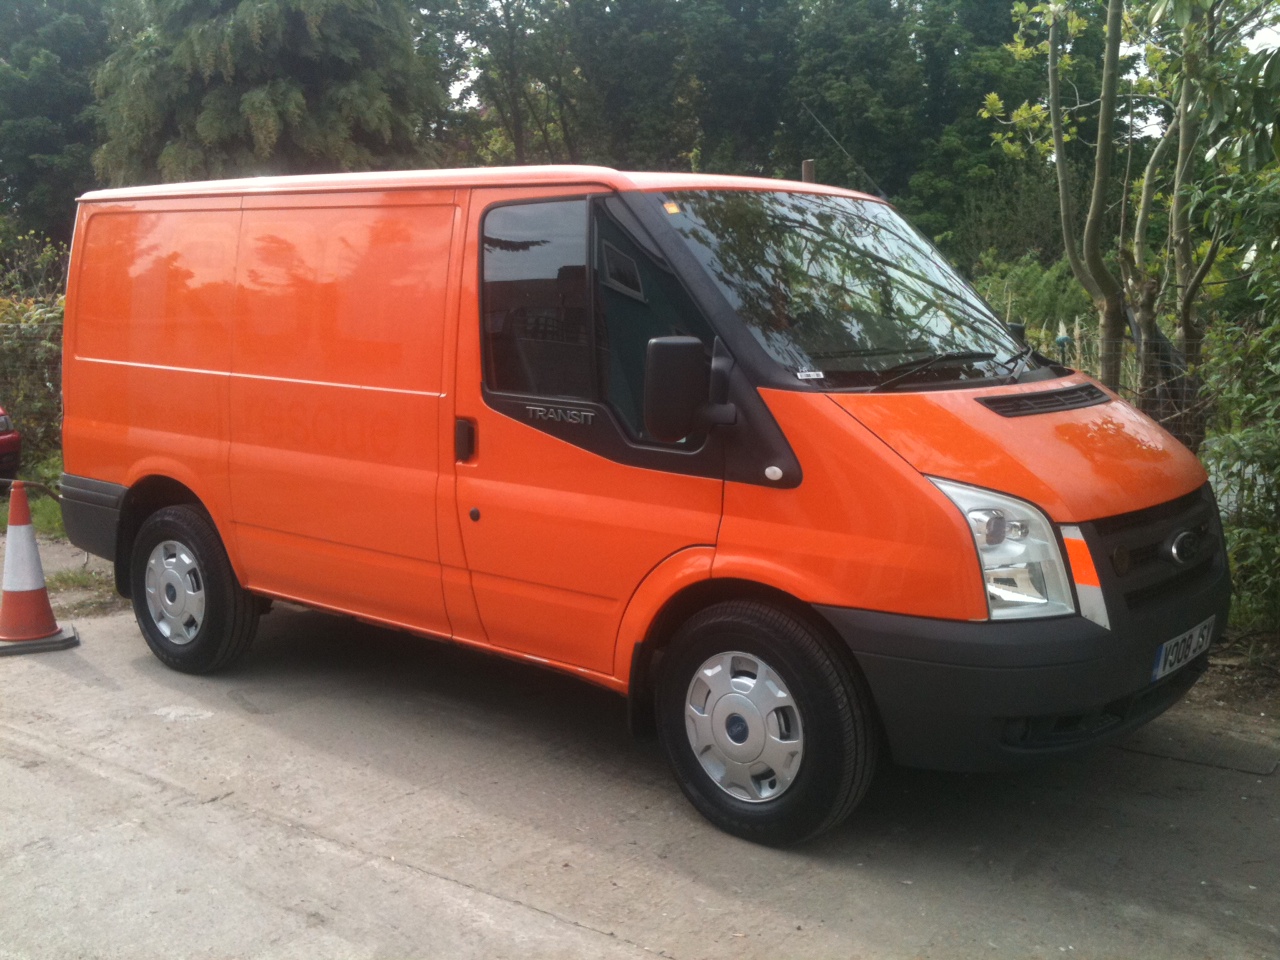 What a lovely orange van | CLIDIVE